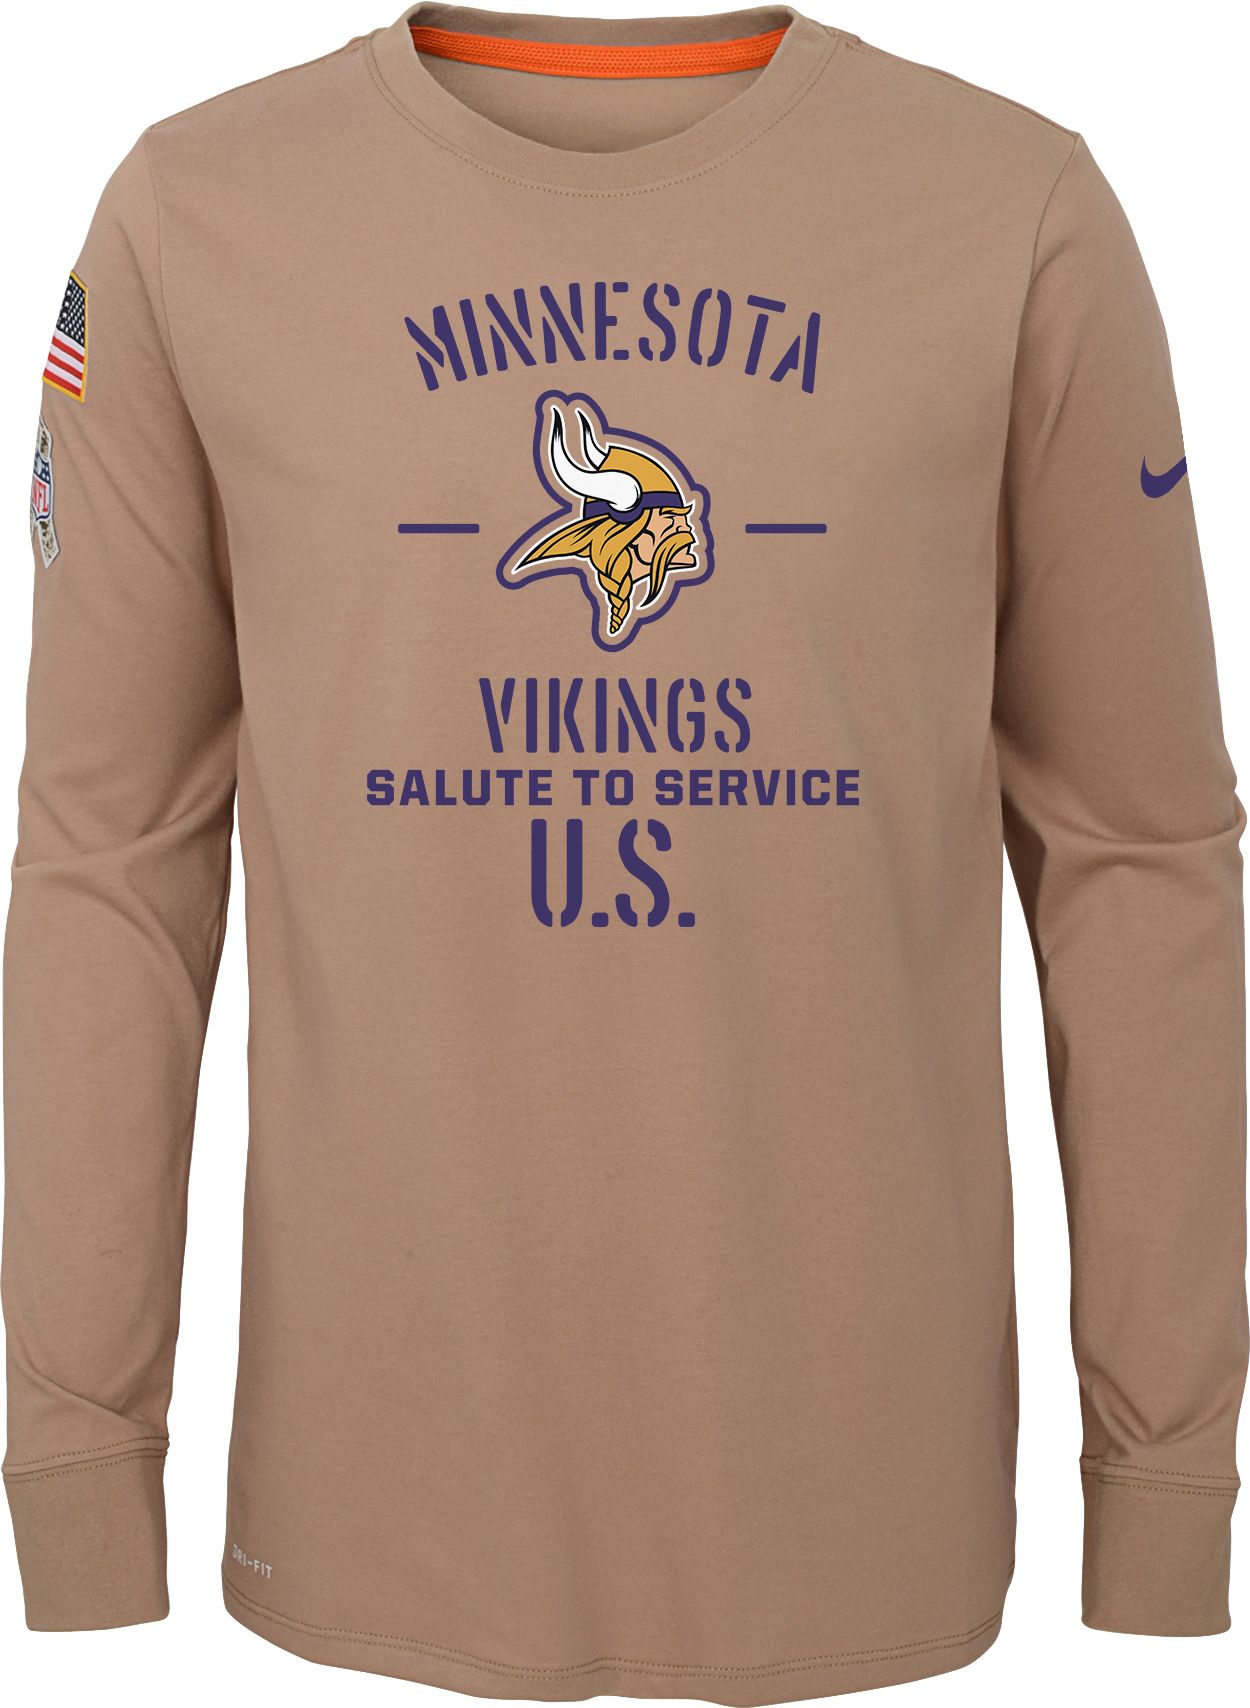 vikings salute to service sweatshirt